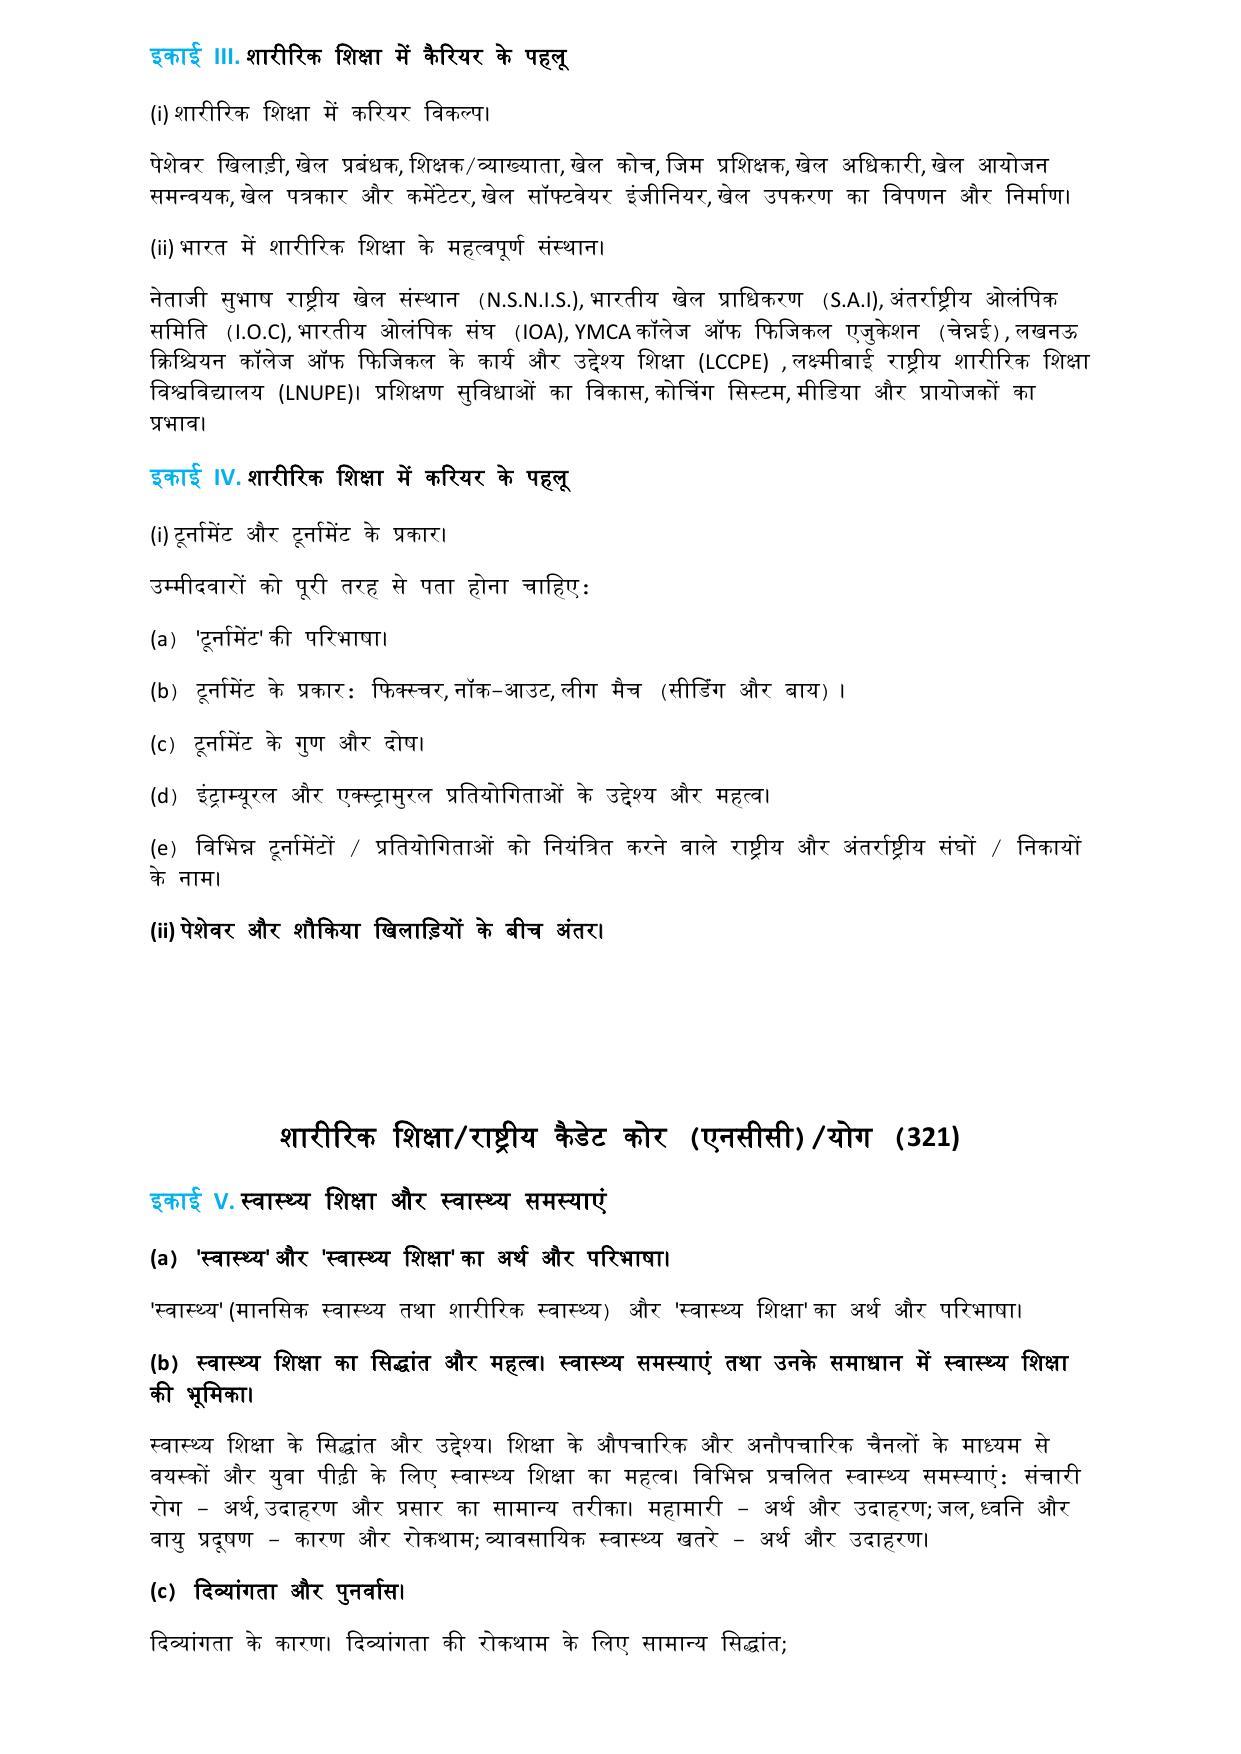 CUET Syllabus for Physical Education (Hindi) - Page 3